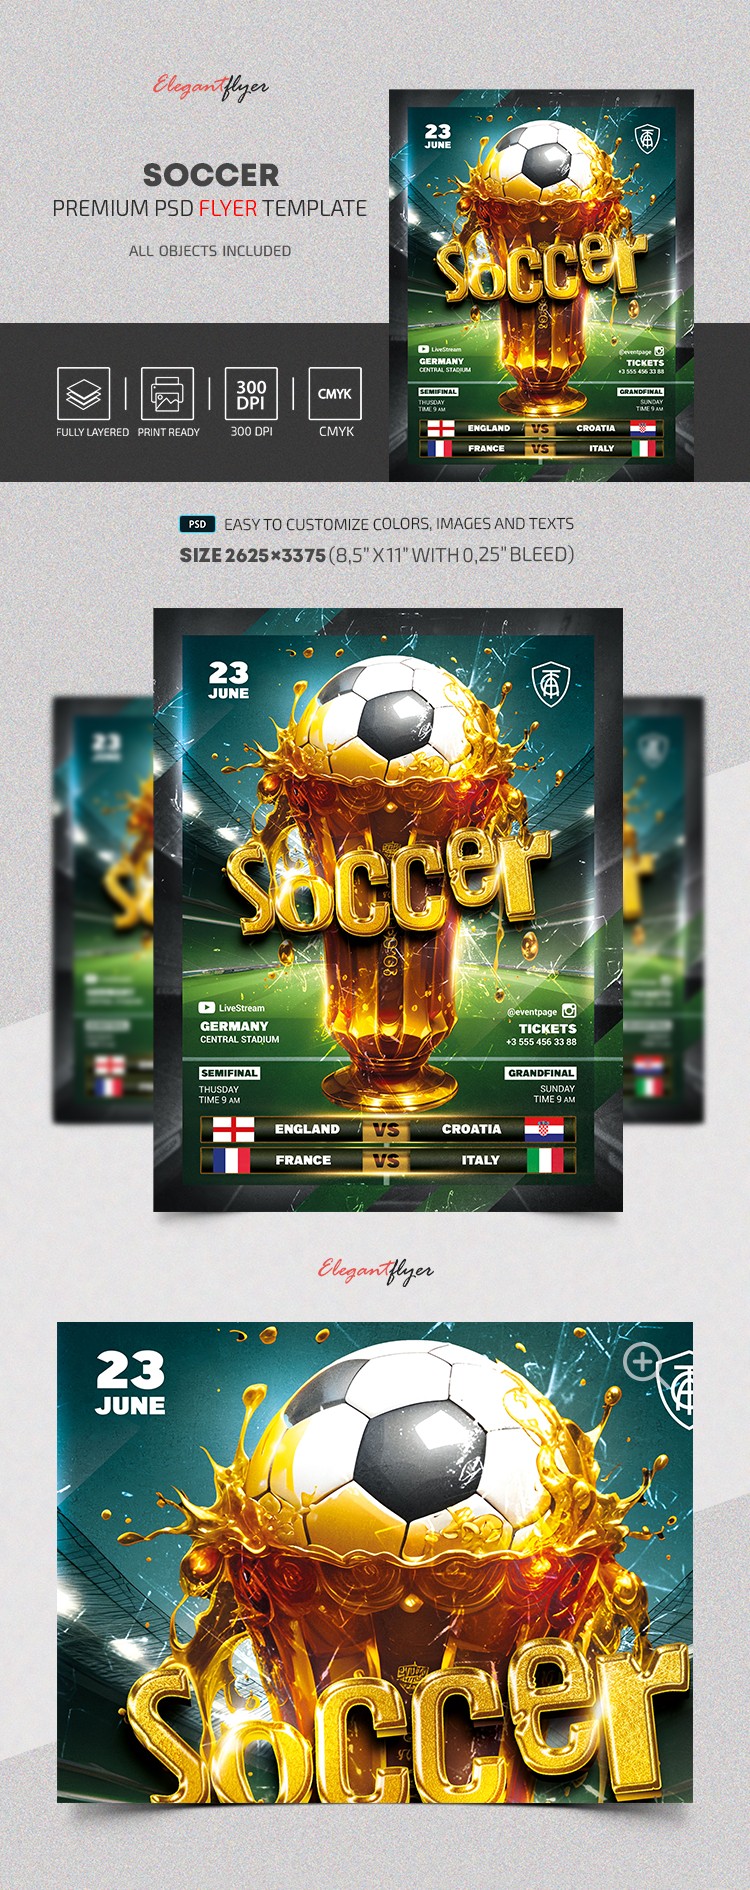 Soccer Game by ElegantFlyer